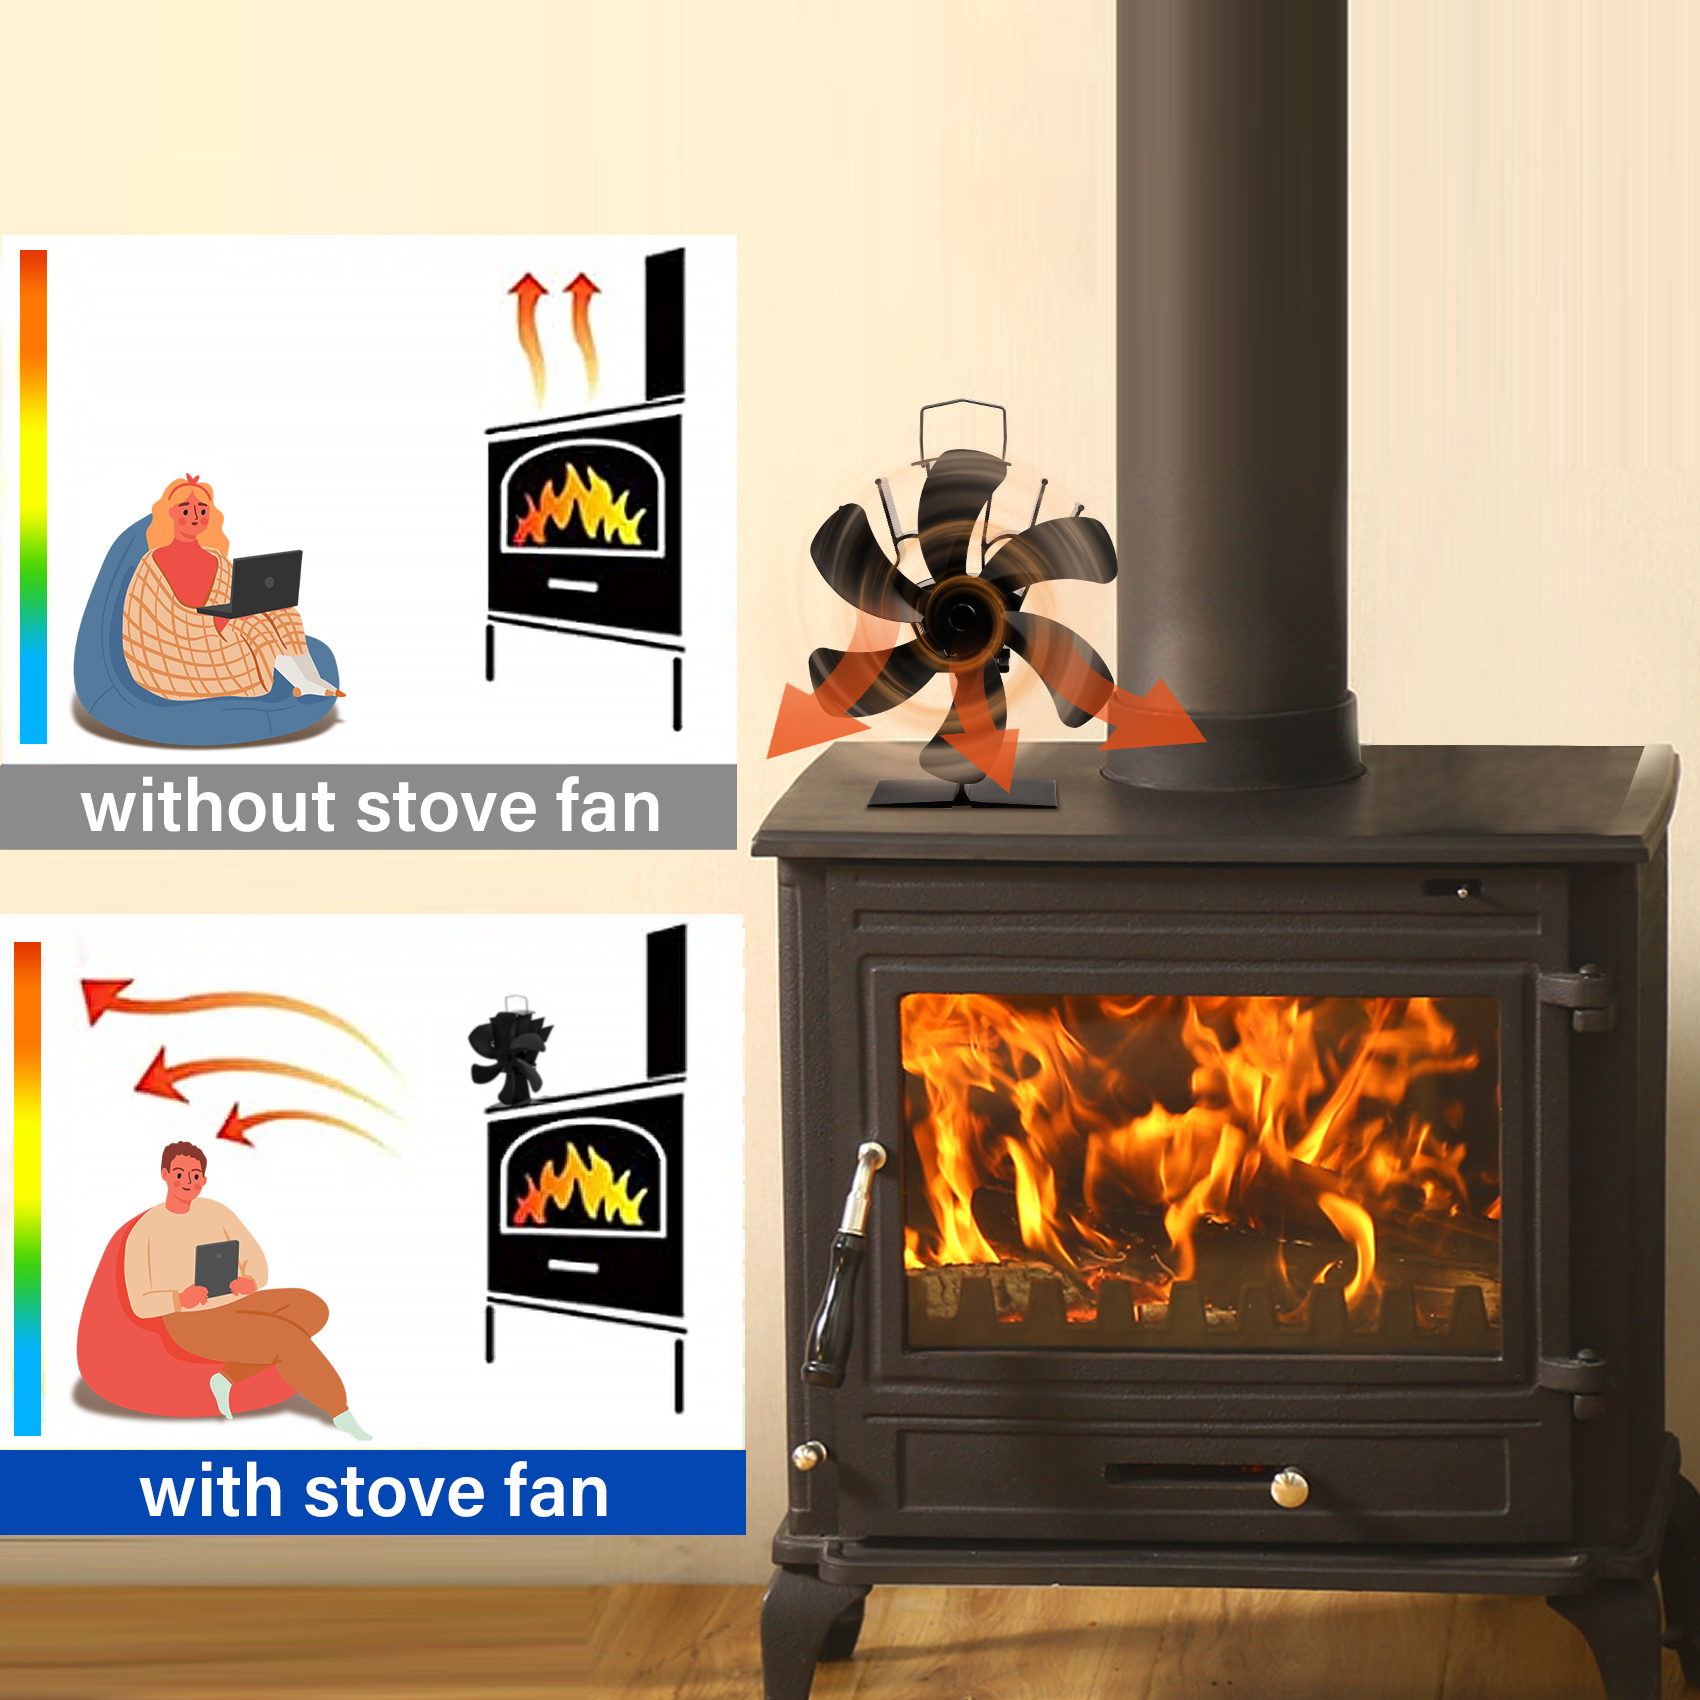 Heat Powered Wood Stove Fan 6 Blades Aluminum Silent Winter Eco Fireplace  Fan